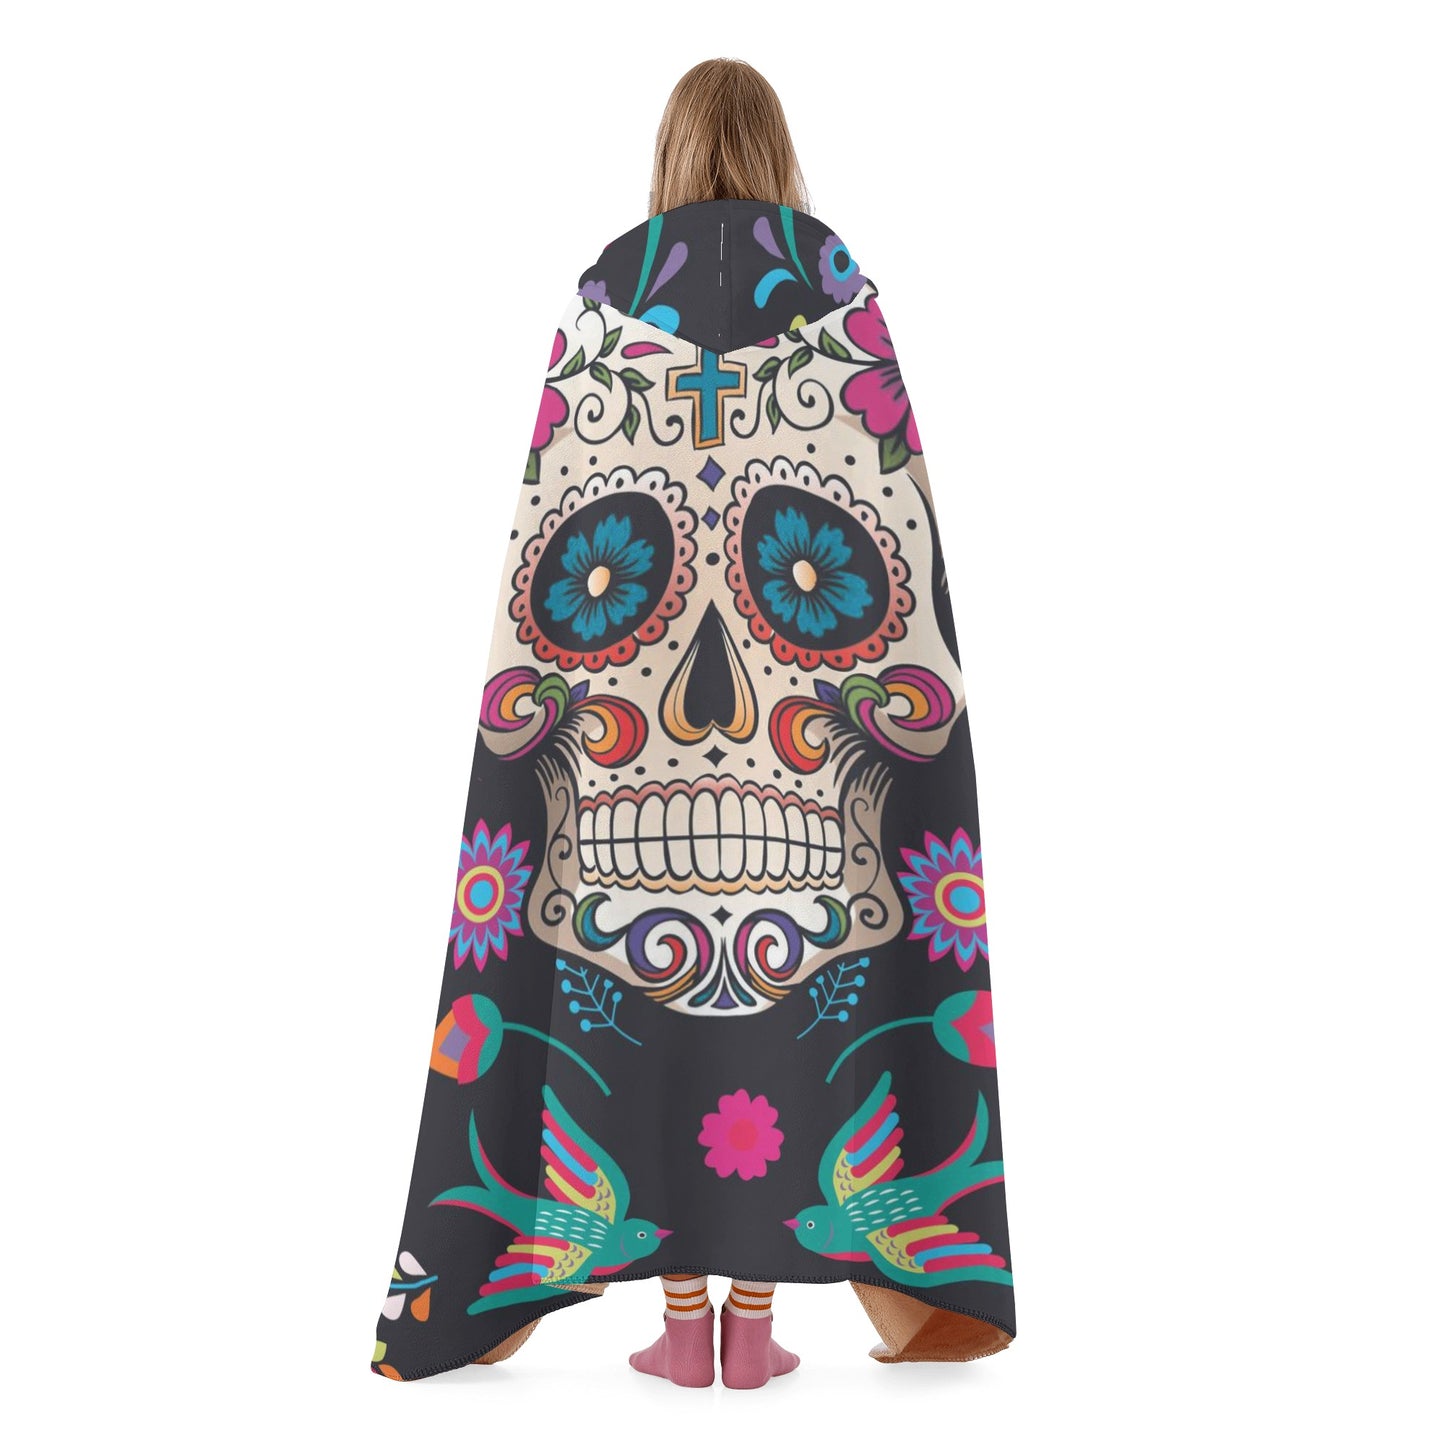 Sugar skull Day of the dead Mexican calaveas skull Hooded Blanket